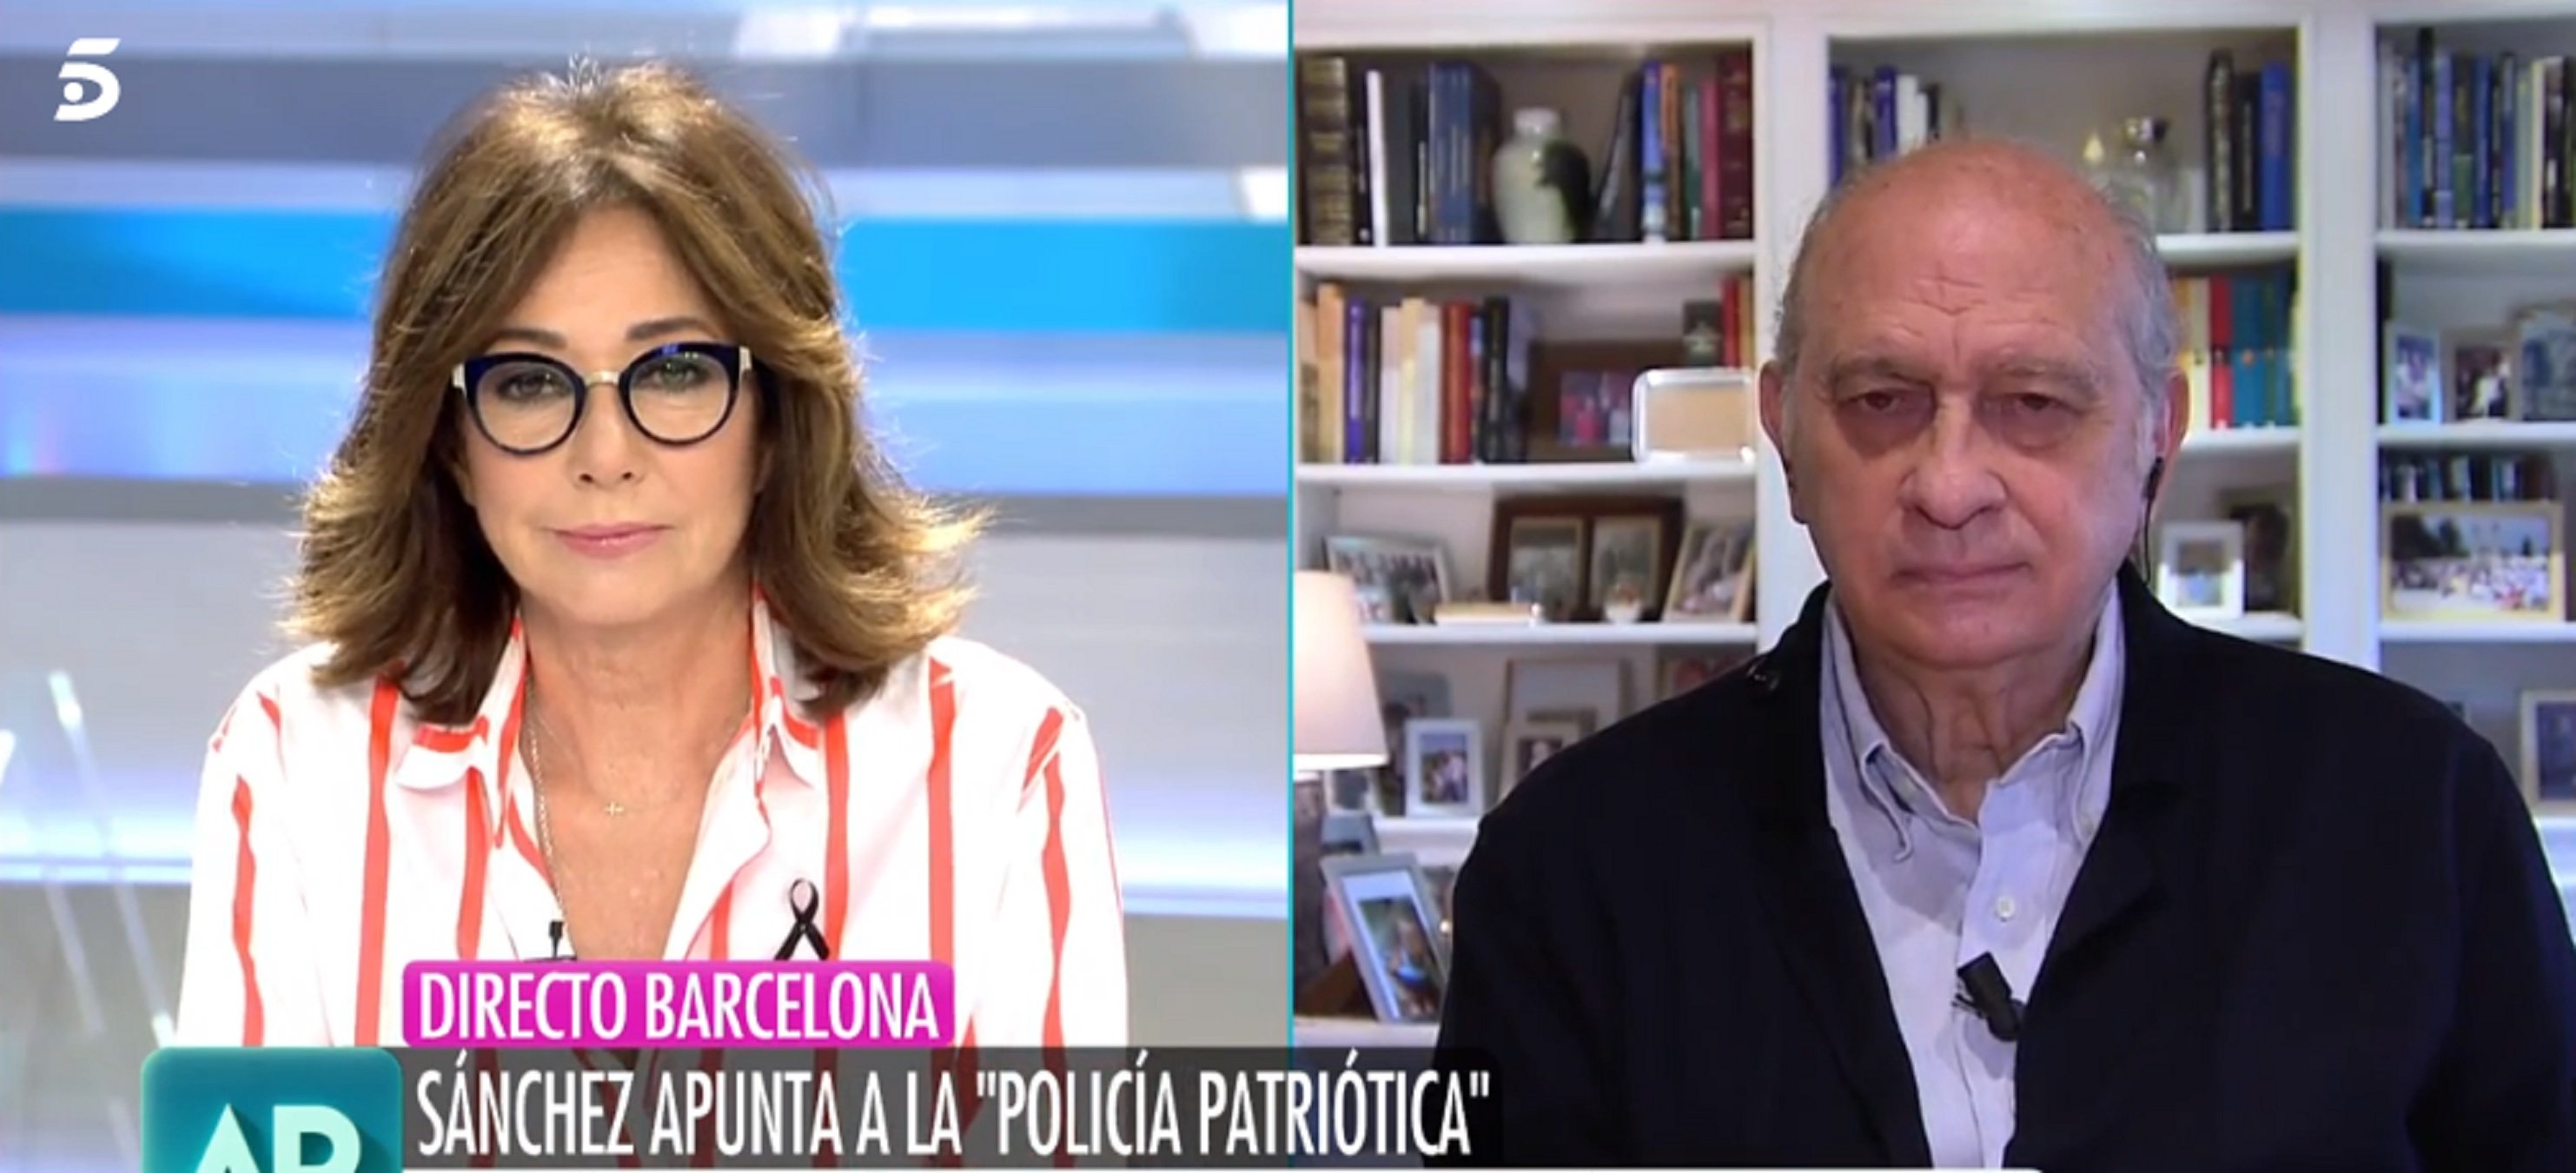 Ana Rosa i Fernández Díaz, emmerdats de clavegueres, ataquen TV3 i Jaume Roures